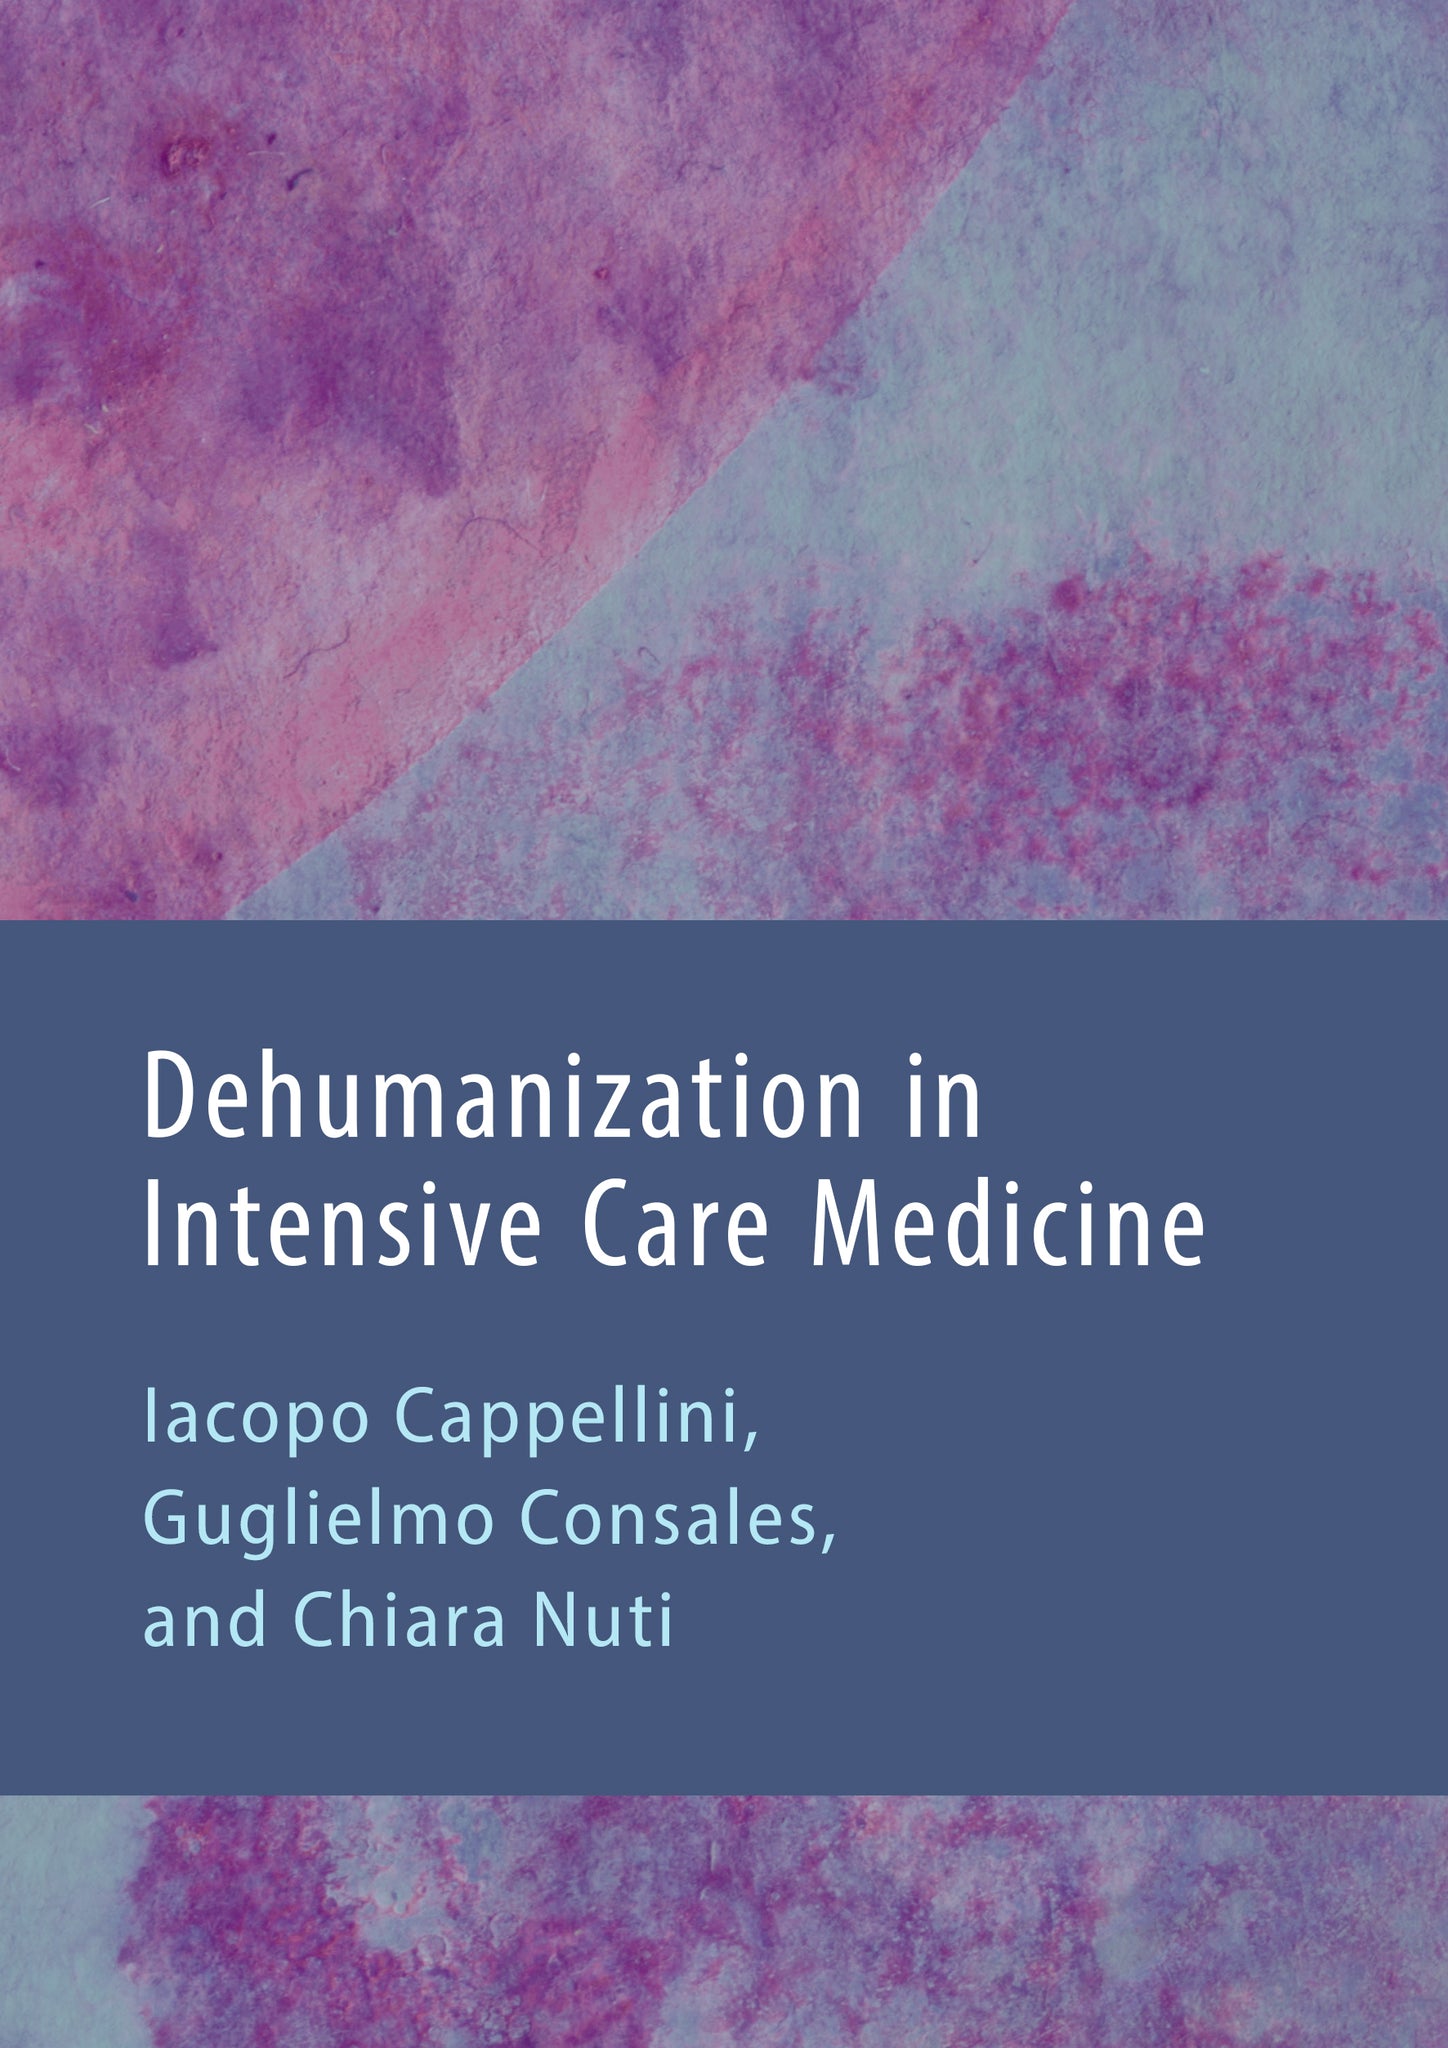 Dehumanization in Intensive Care Medicine